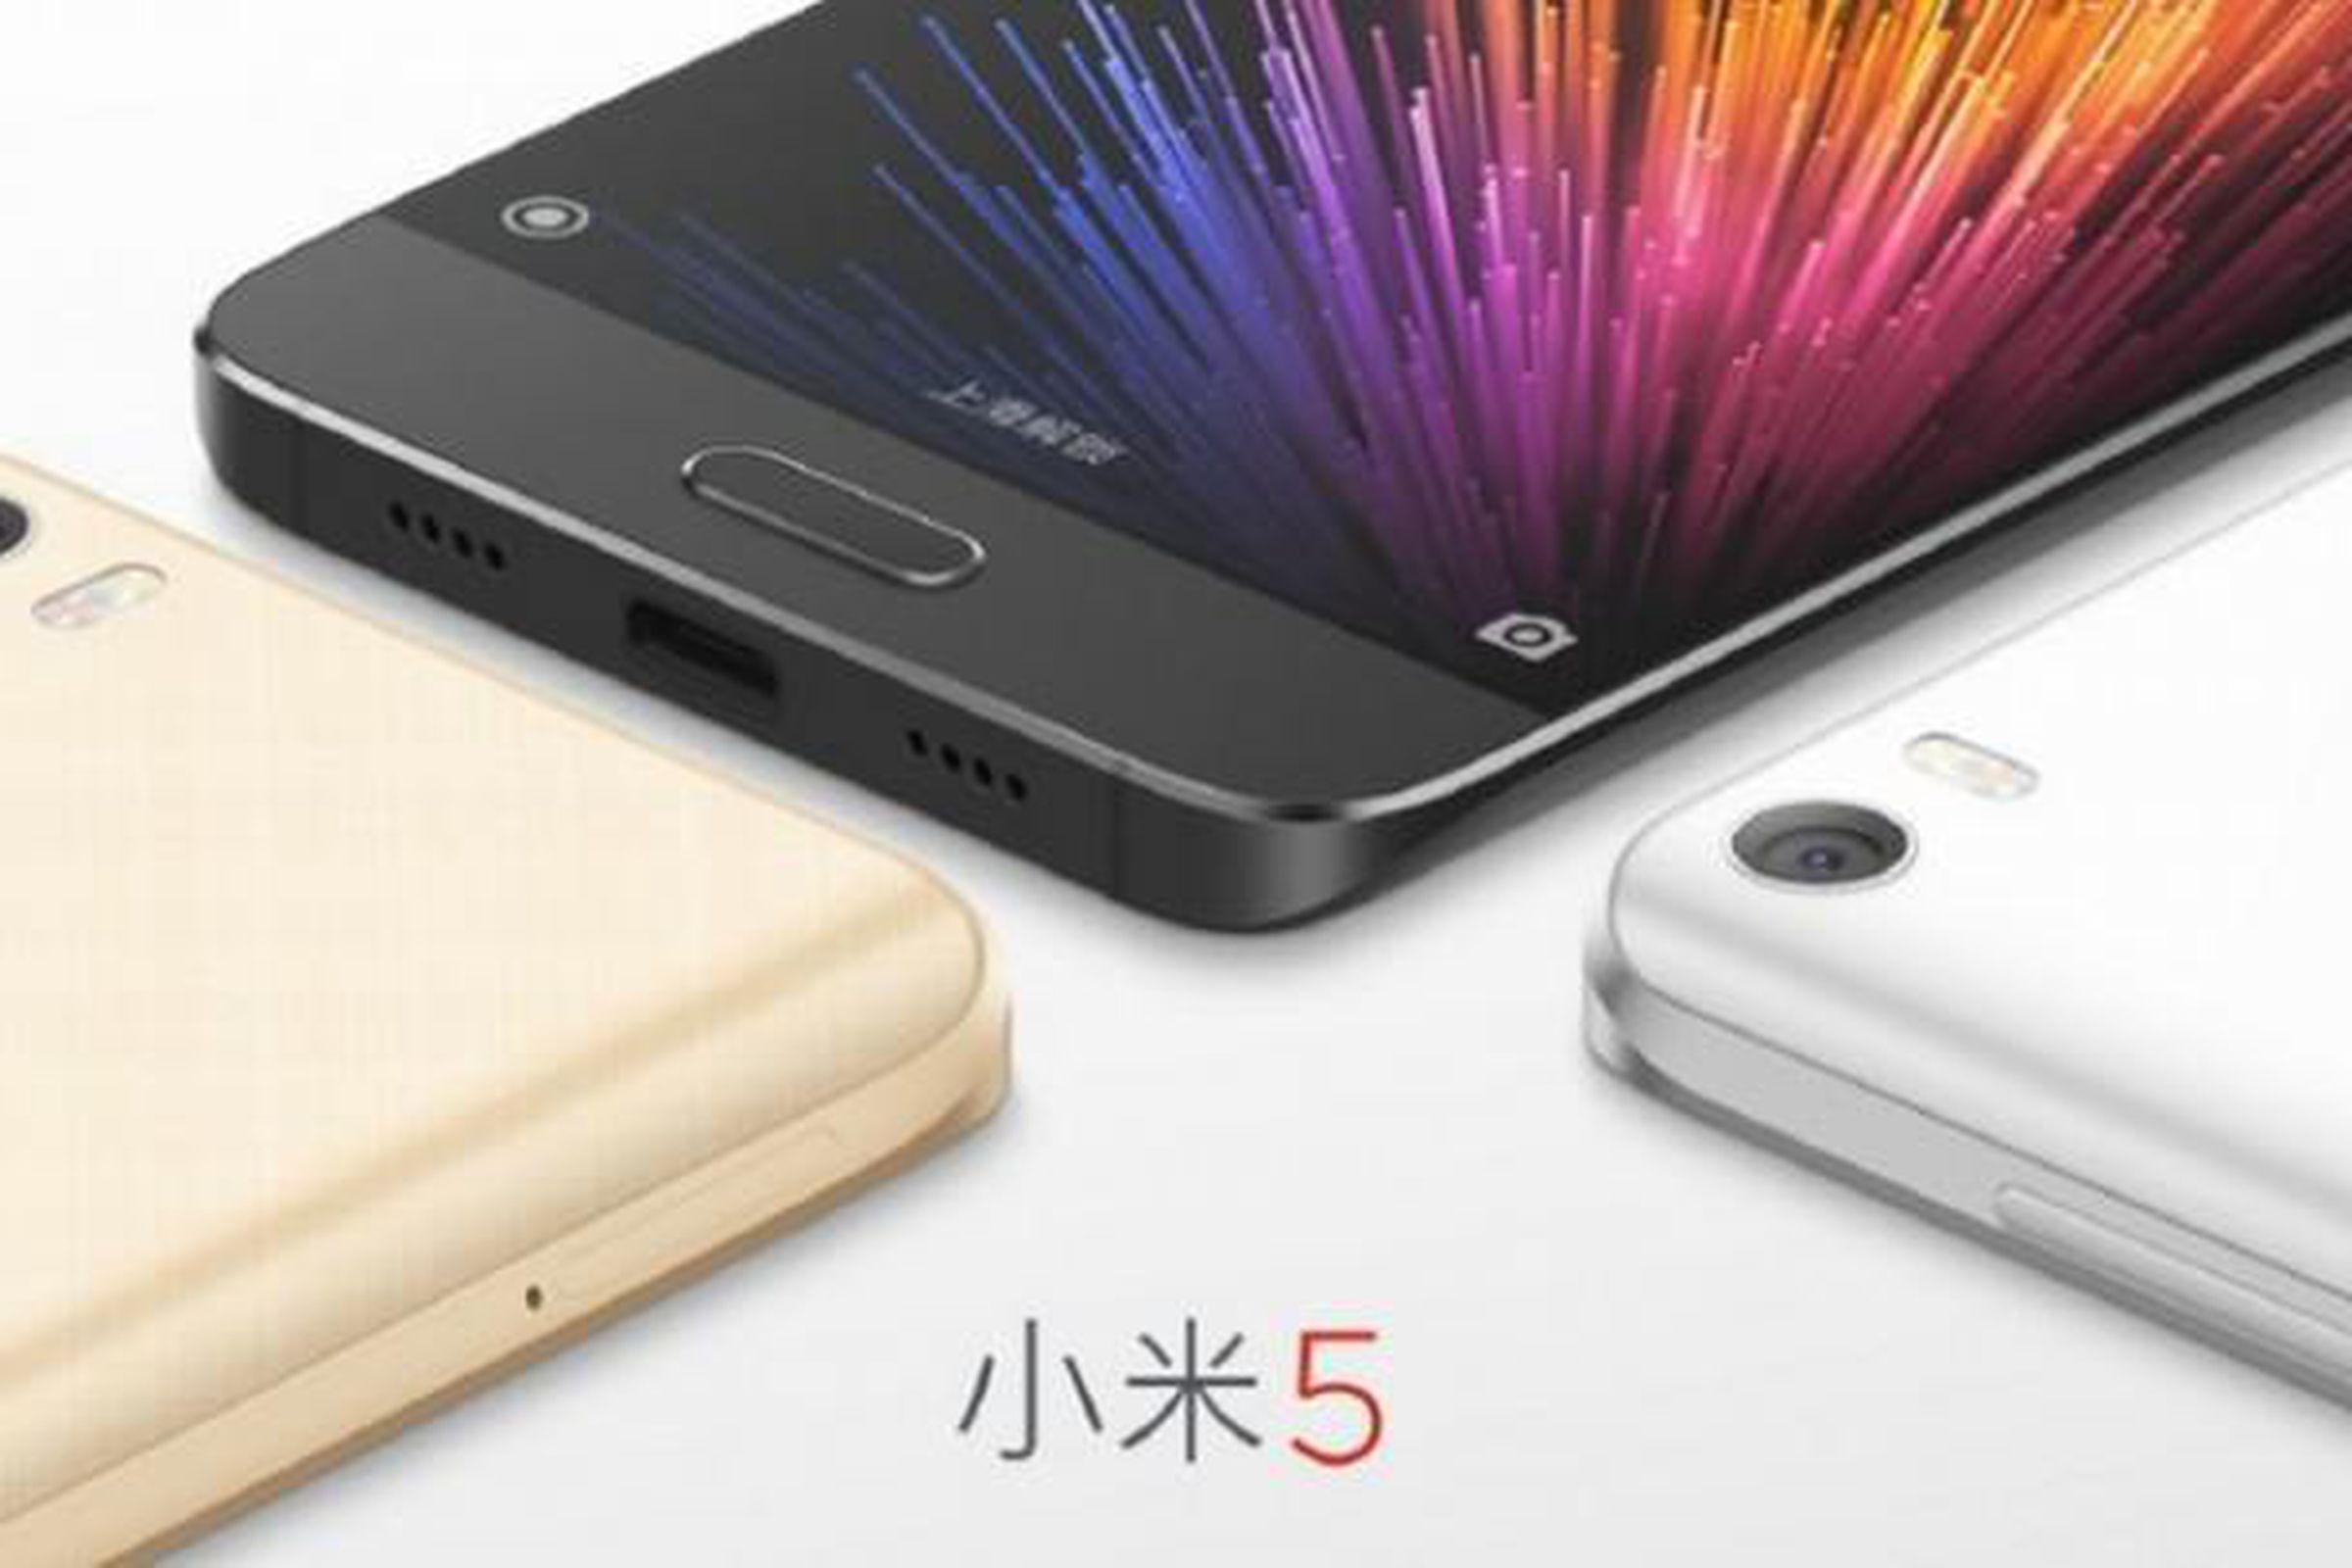 Xiaomi’s Mi5 flagship